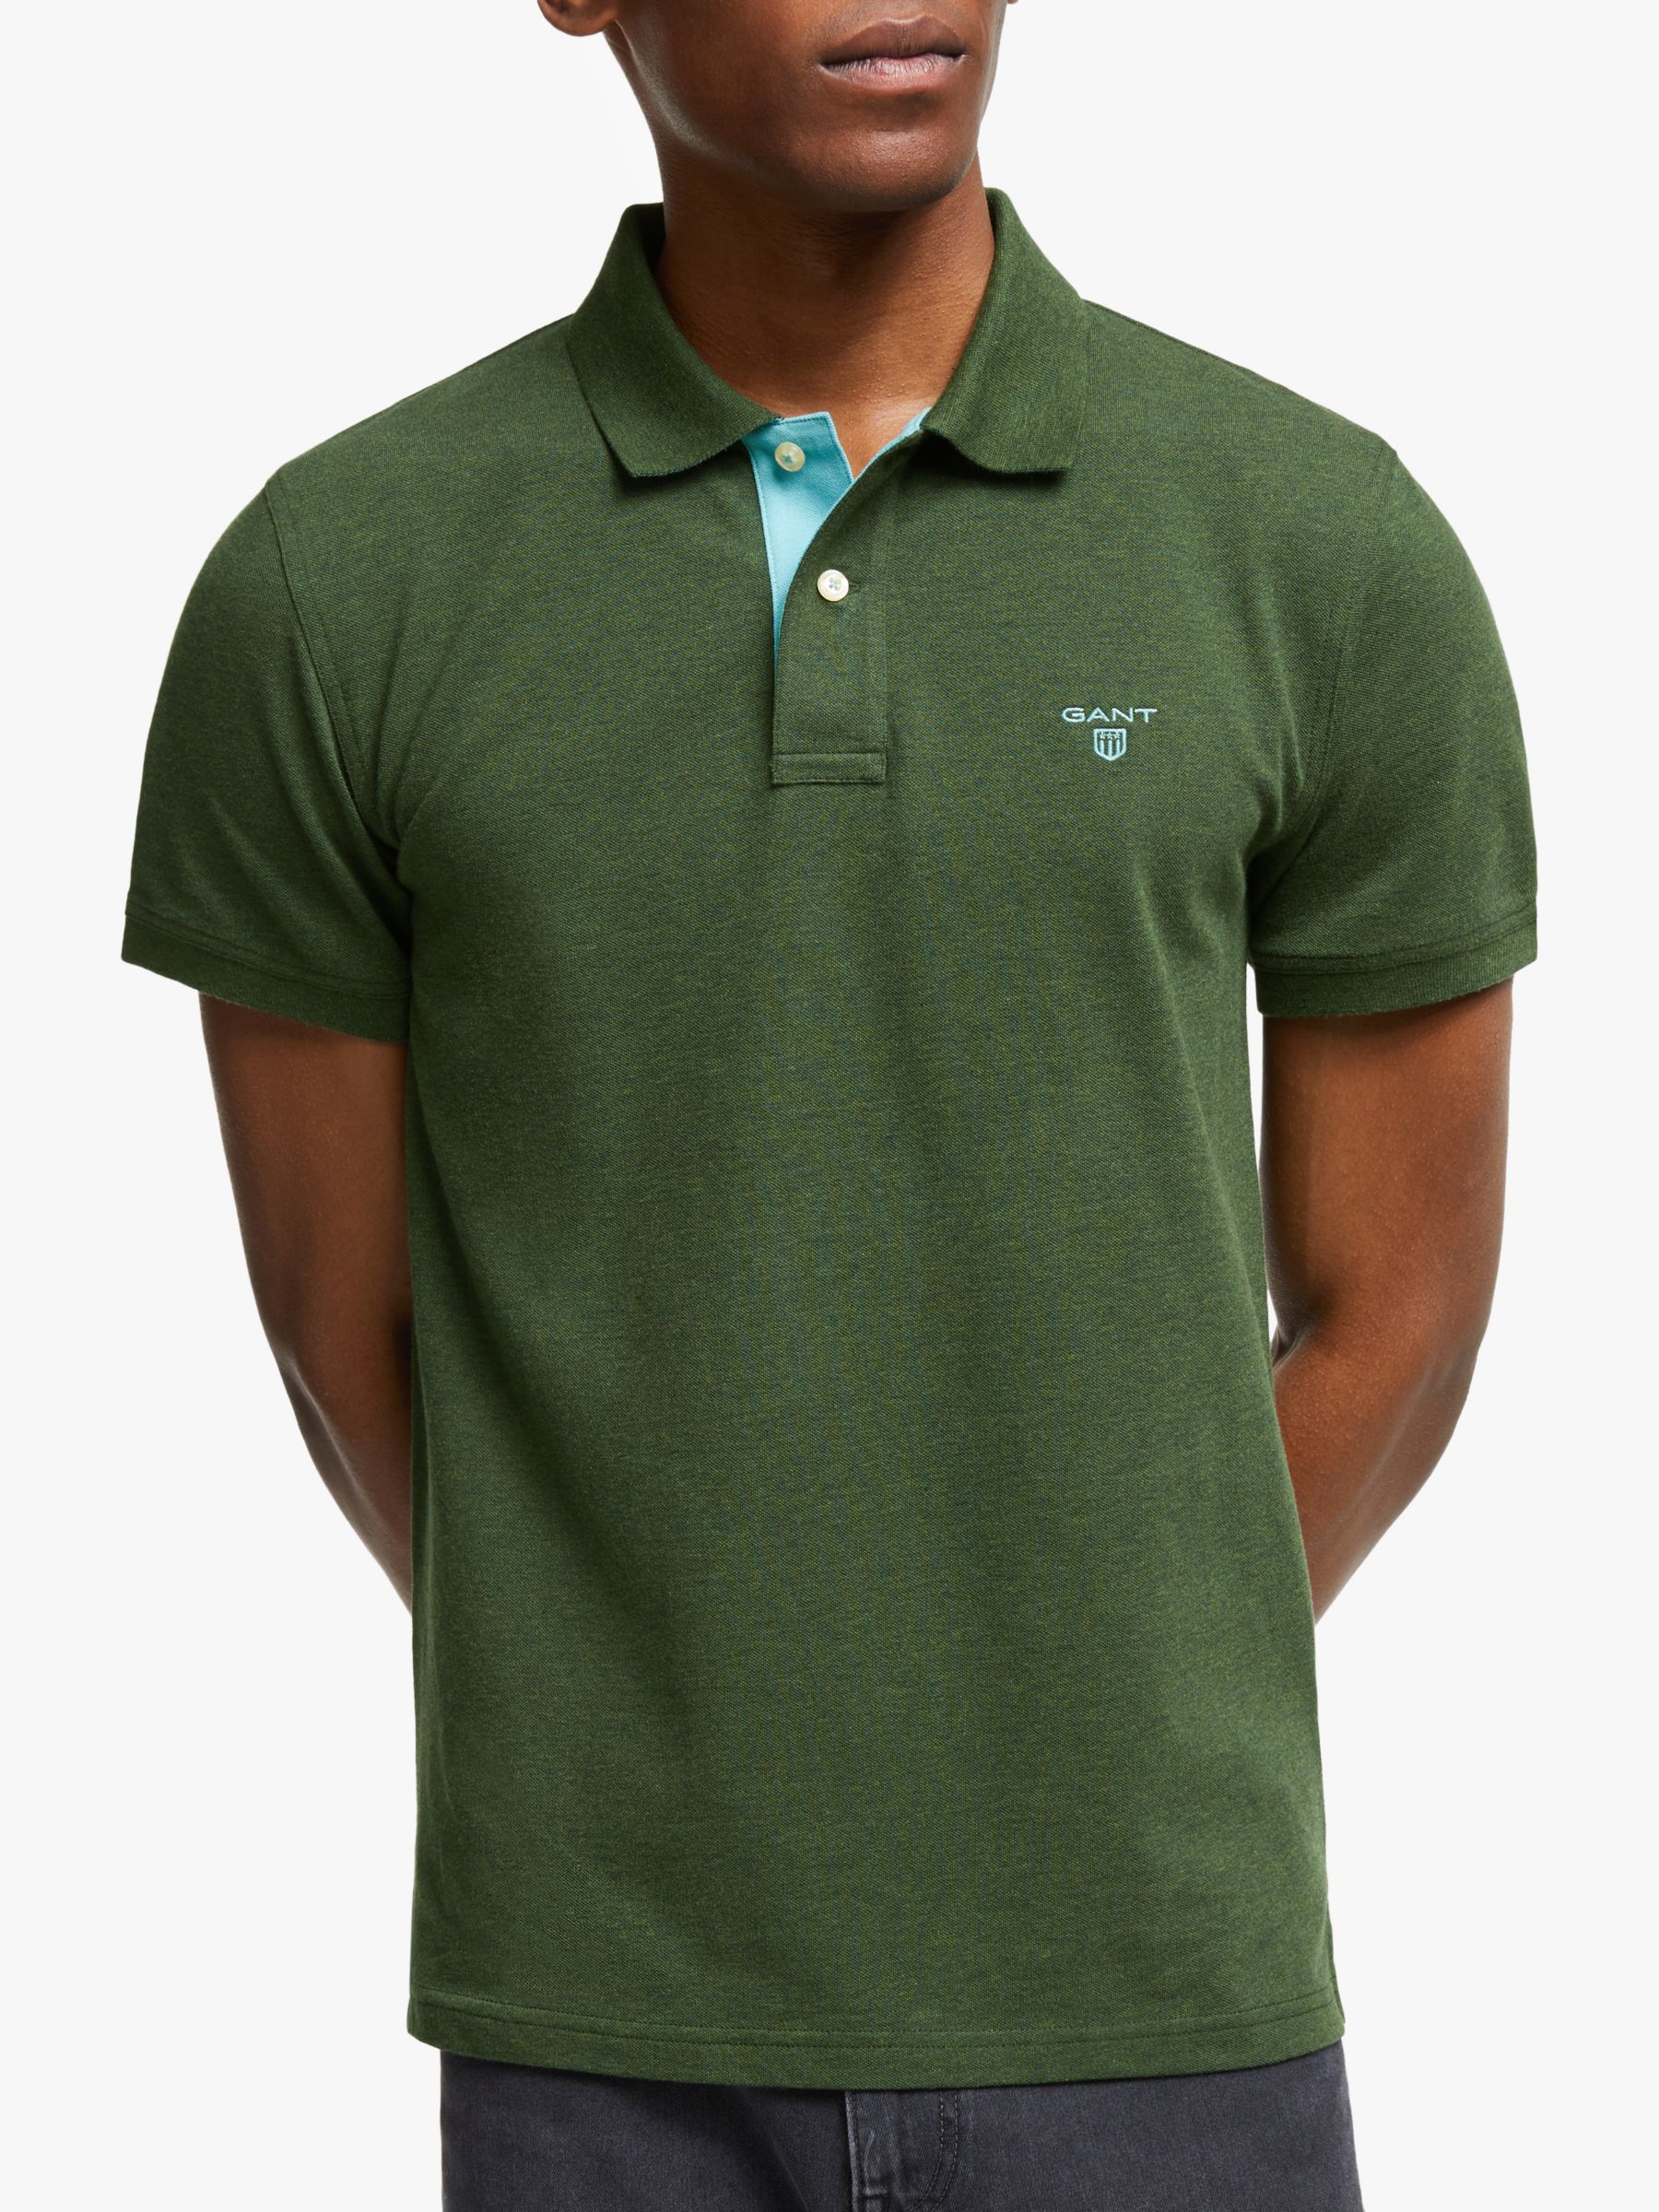 GANT Contrast Collar Polo Shirt | Green at John Lewis & Partners